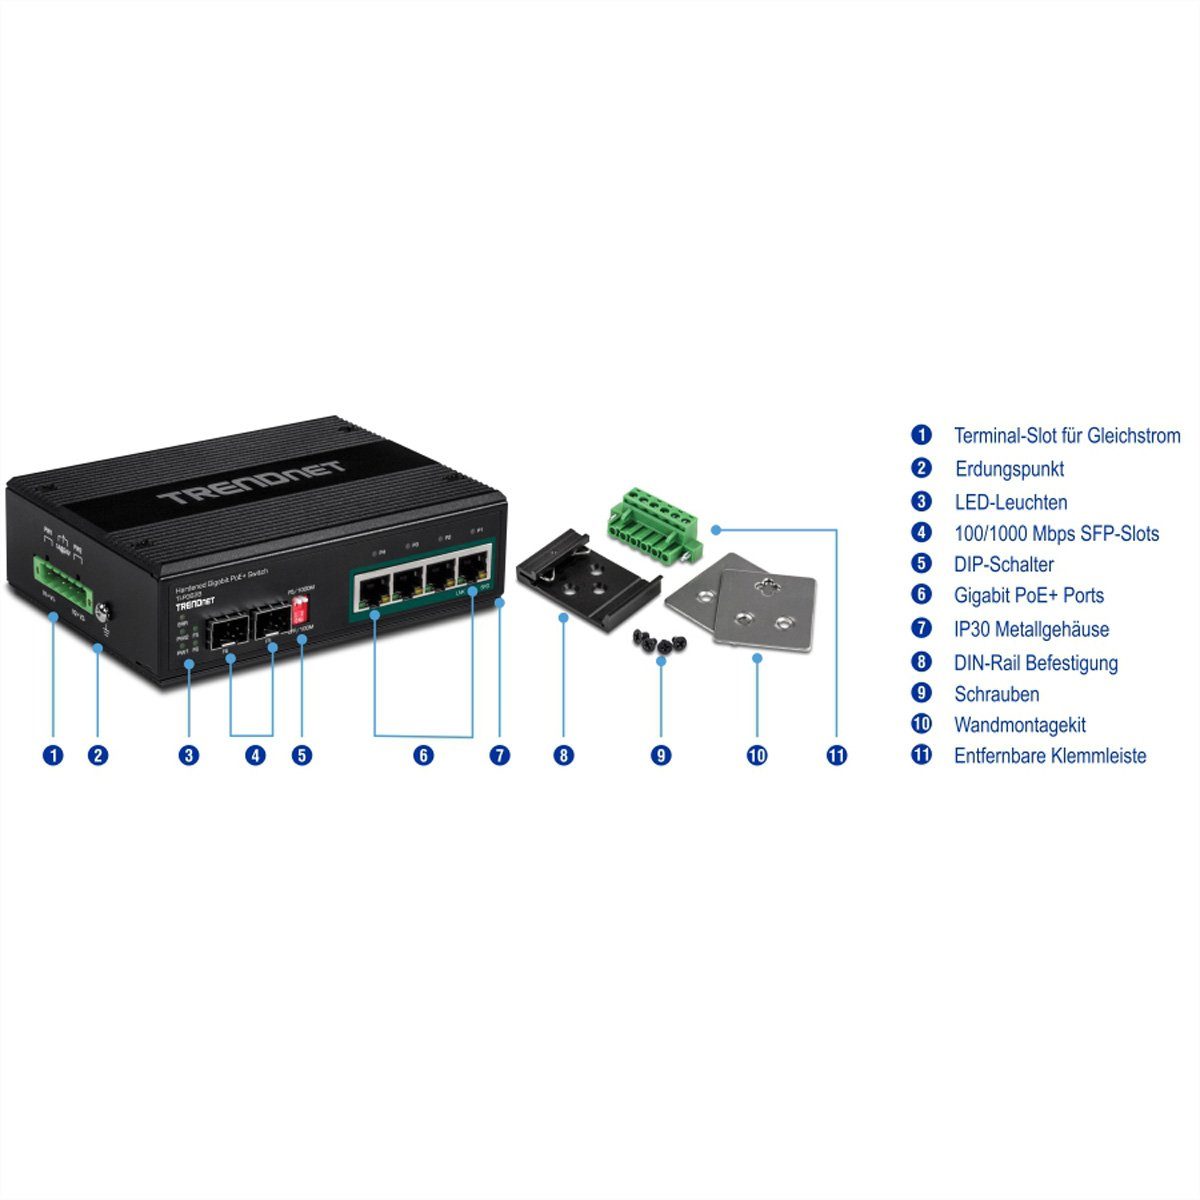 Trendnet TI-PG62B 6port Switch 2SFP Industrial Gigabit Netzwerk-Switch PoE